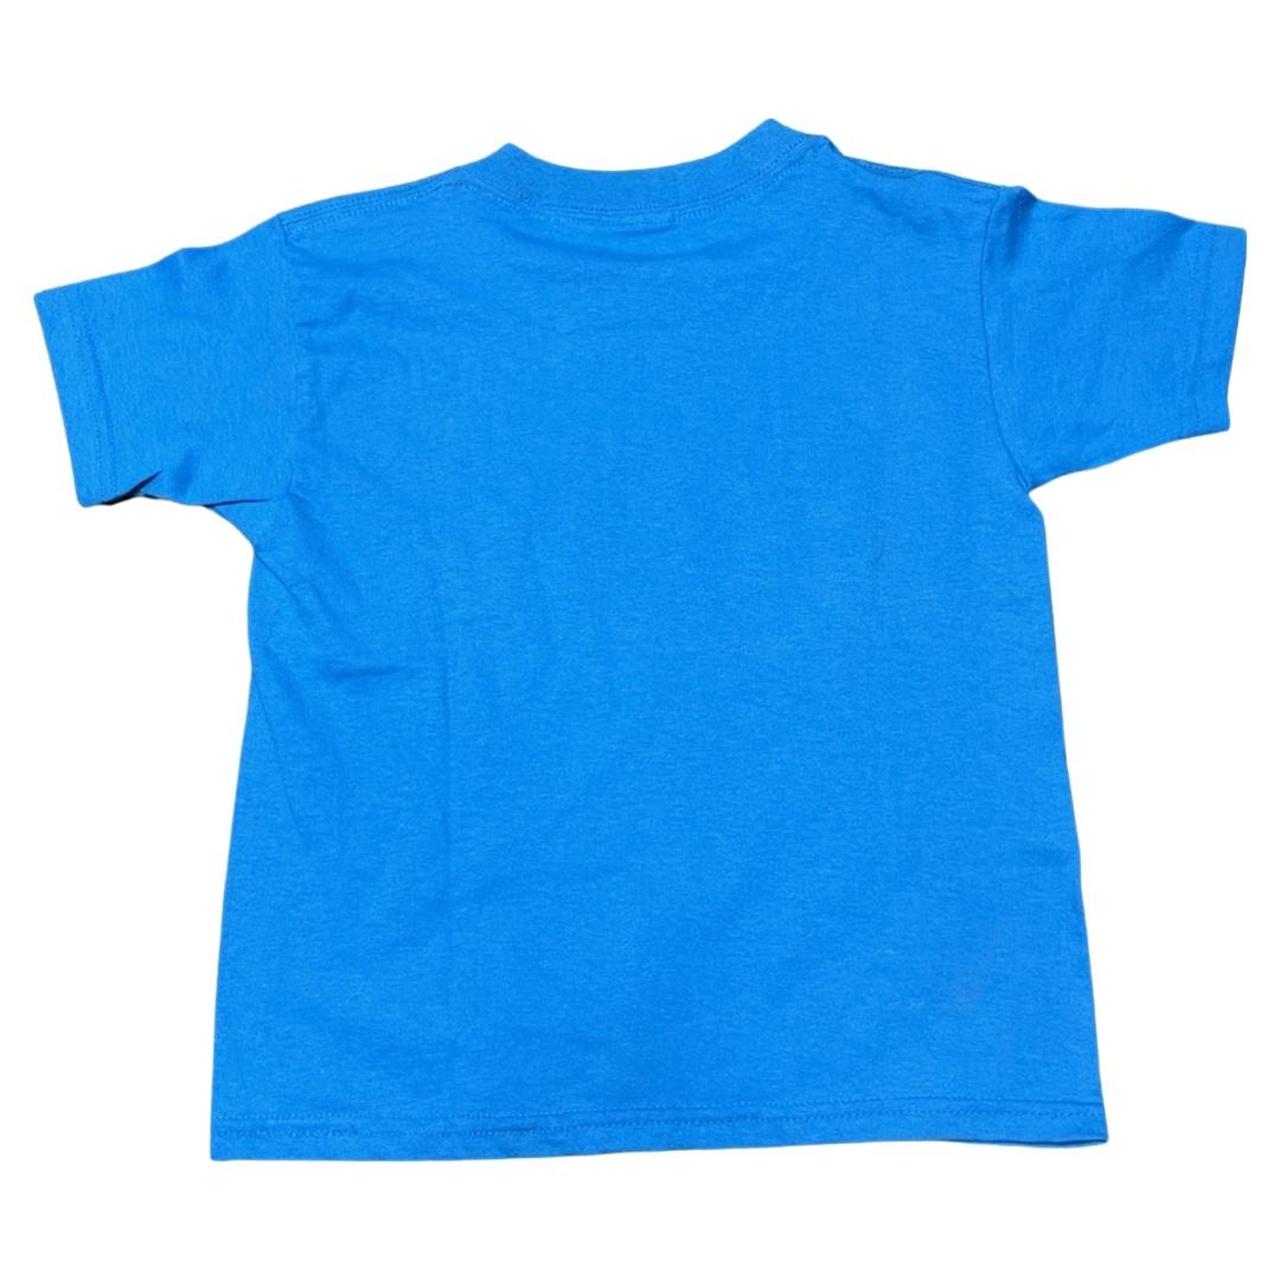 Hybrid Apparel Blue and Navy T-shirt (3)